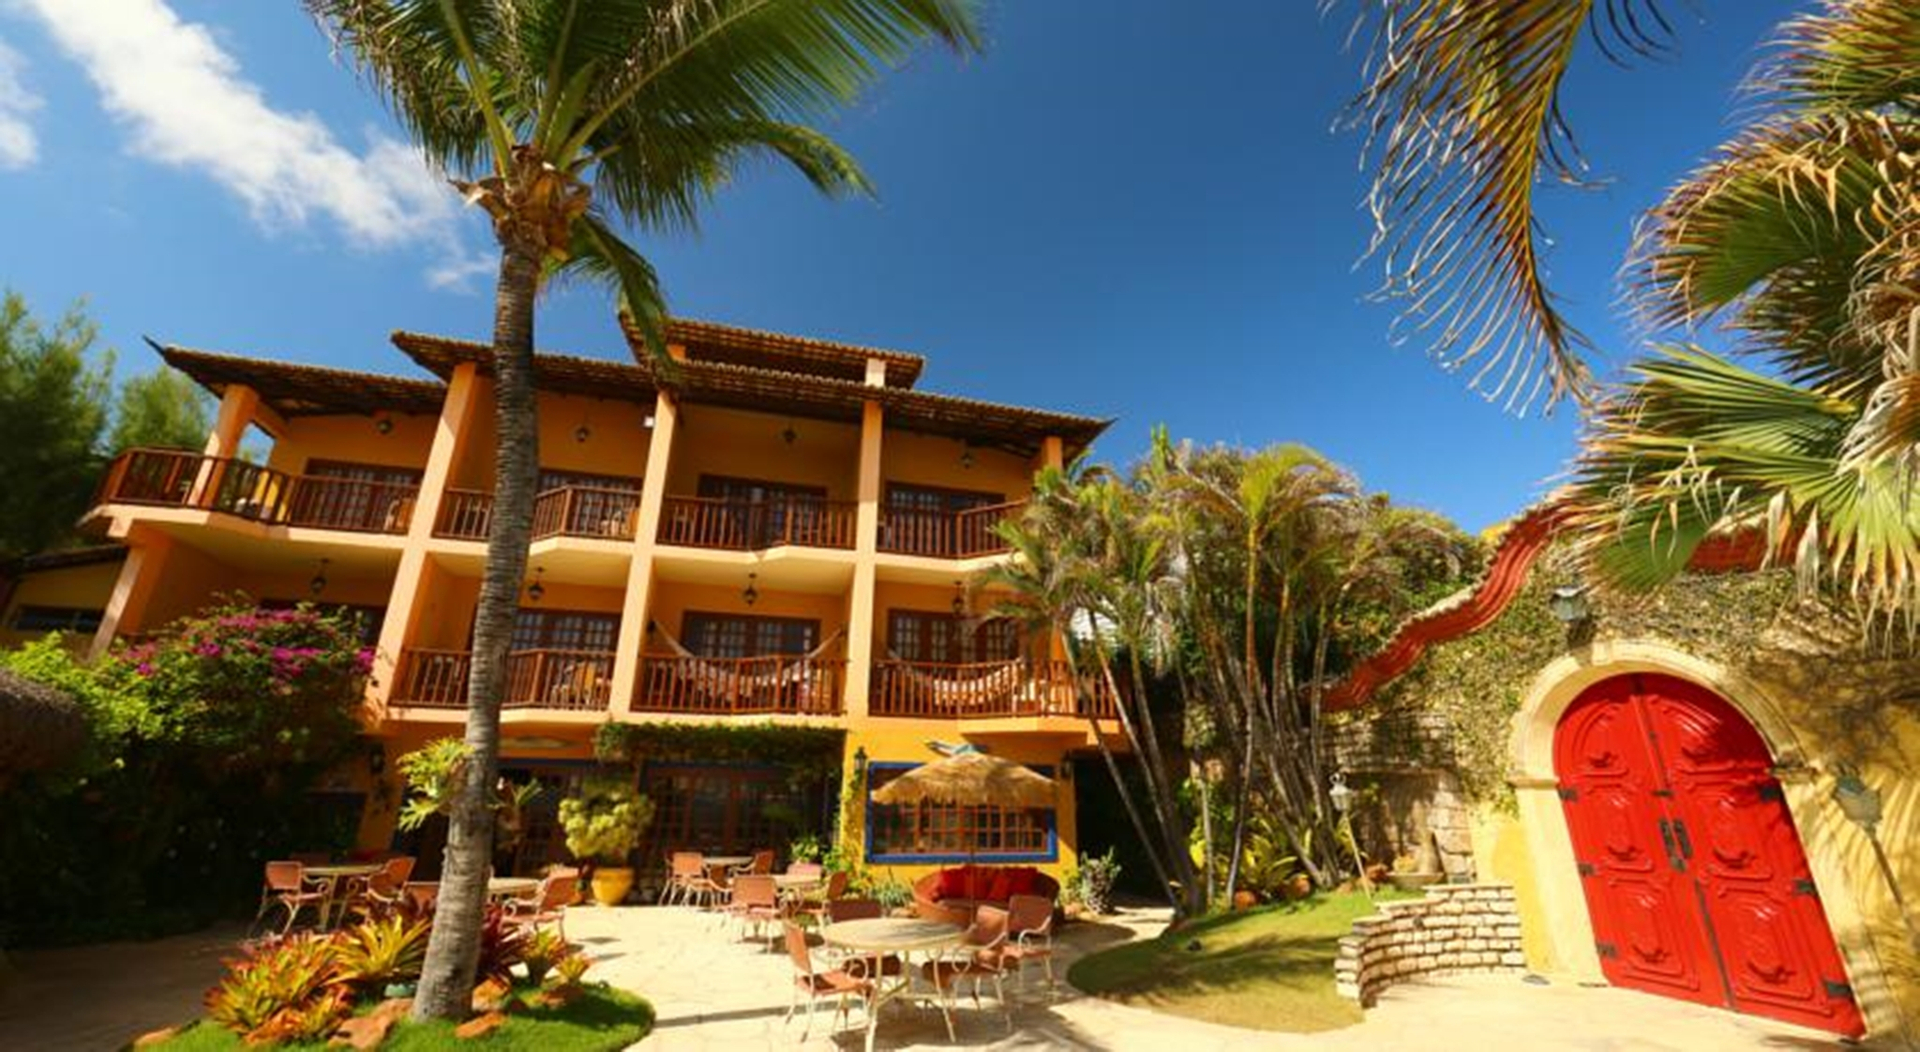 Exterior & Views 2, Manary Praia Hotel, Natal